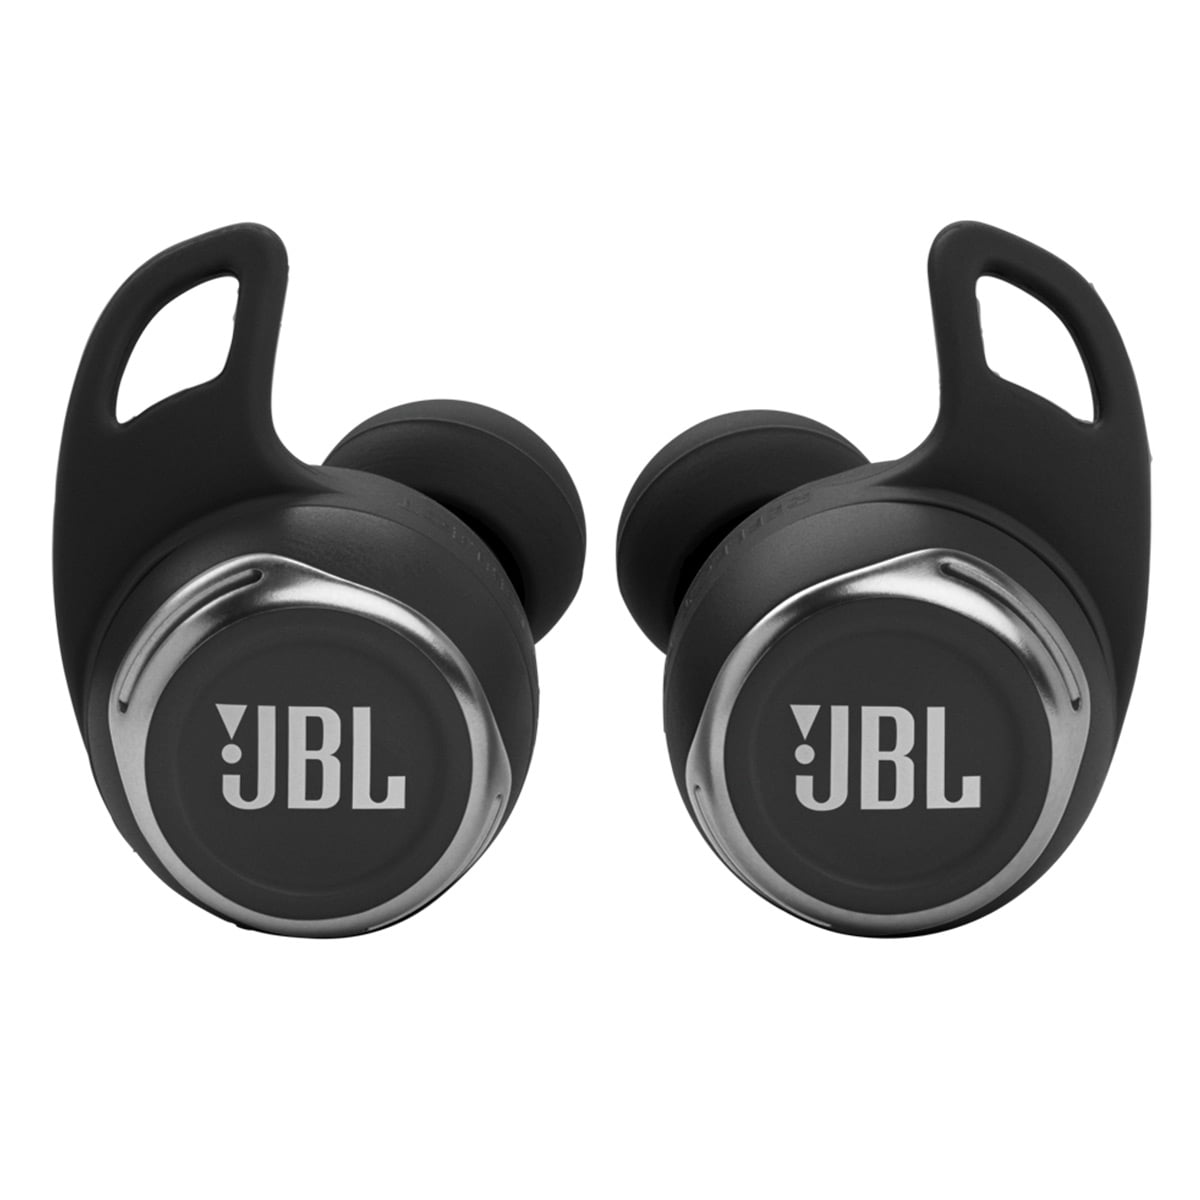 Купить наушники jbl pro. JBL reflect Flow Pro. Наушники JBL reflect Flow. JBL reflect Flow Wireless Earbuds. Беспроводные наушники JBL reflect Flow Pro.